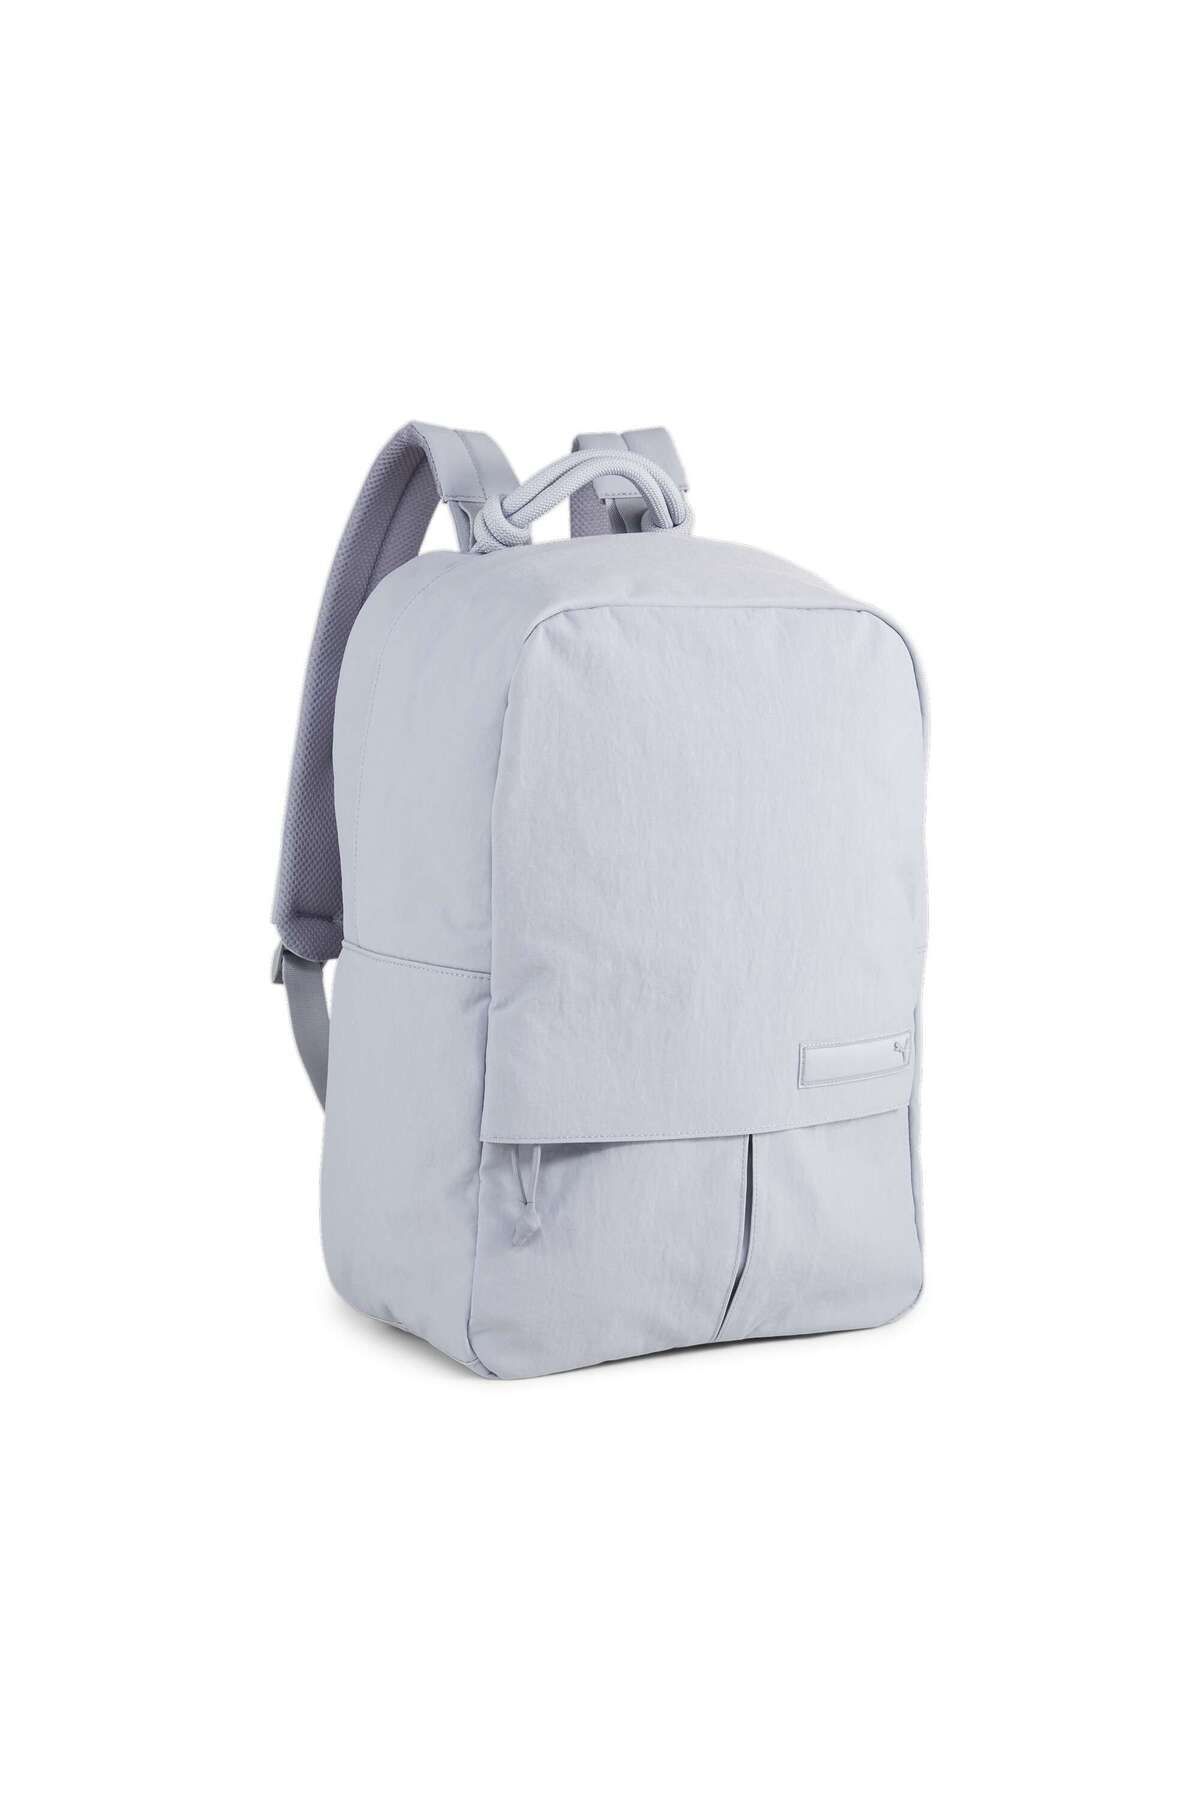 Puma BL Medium Backpack